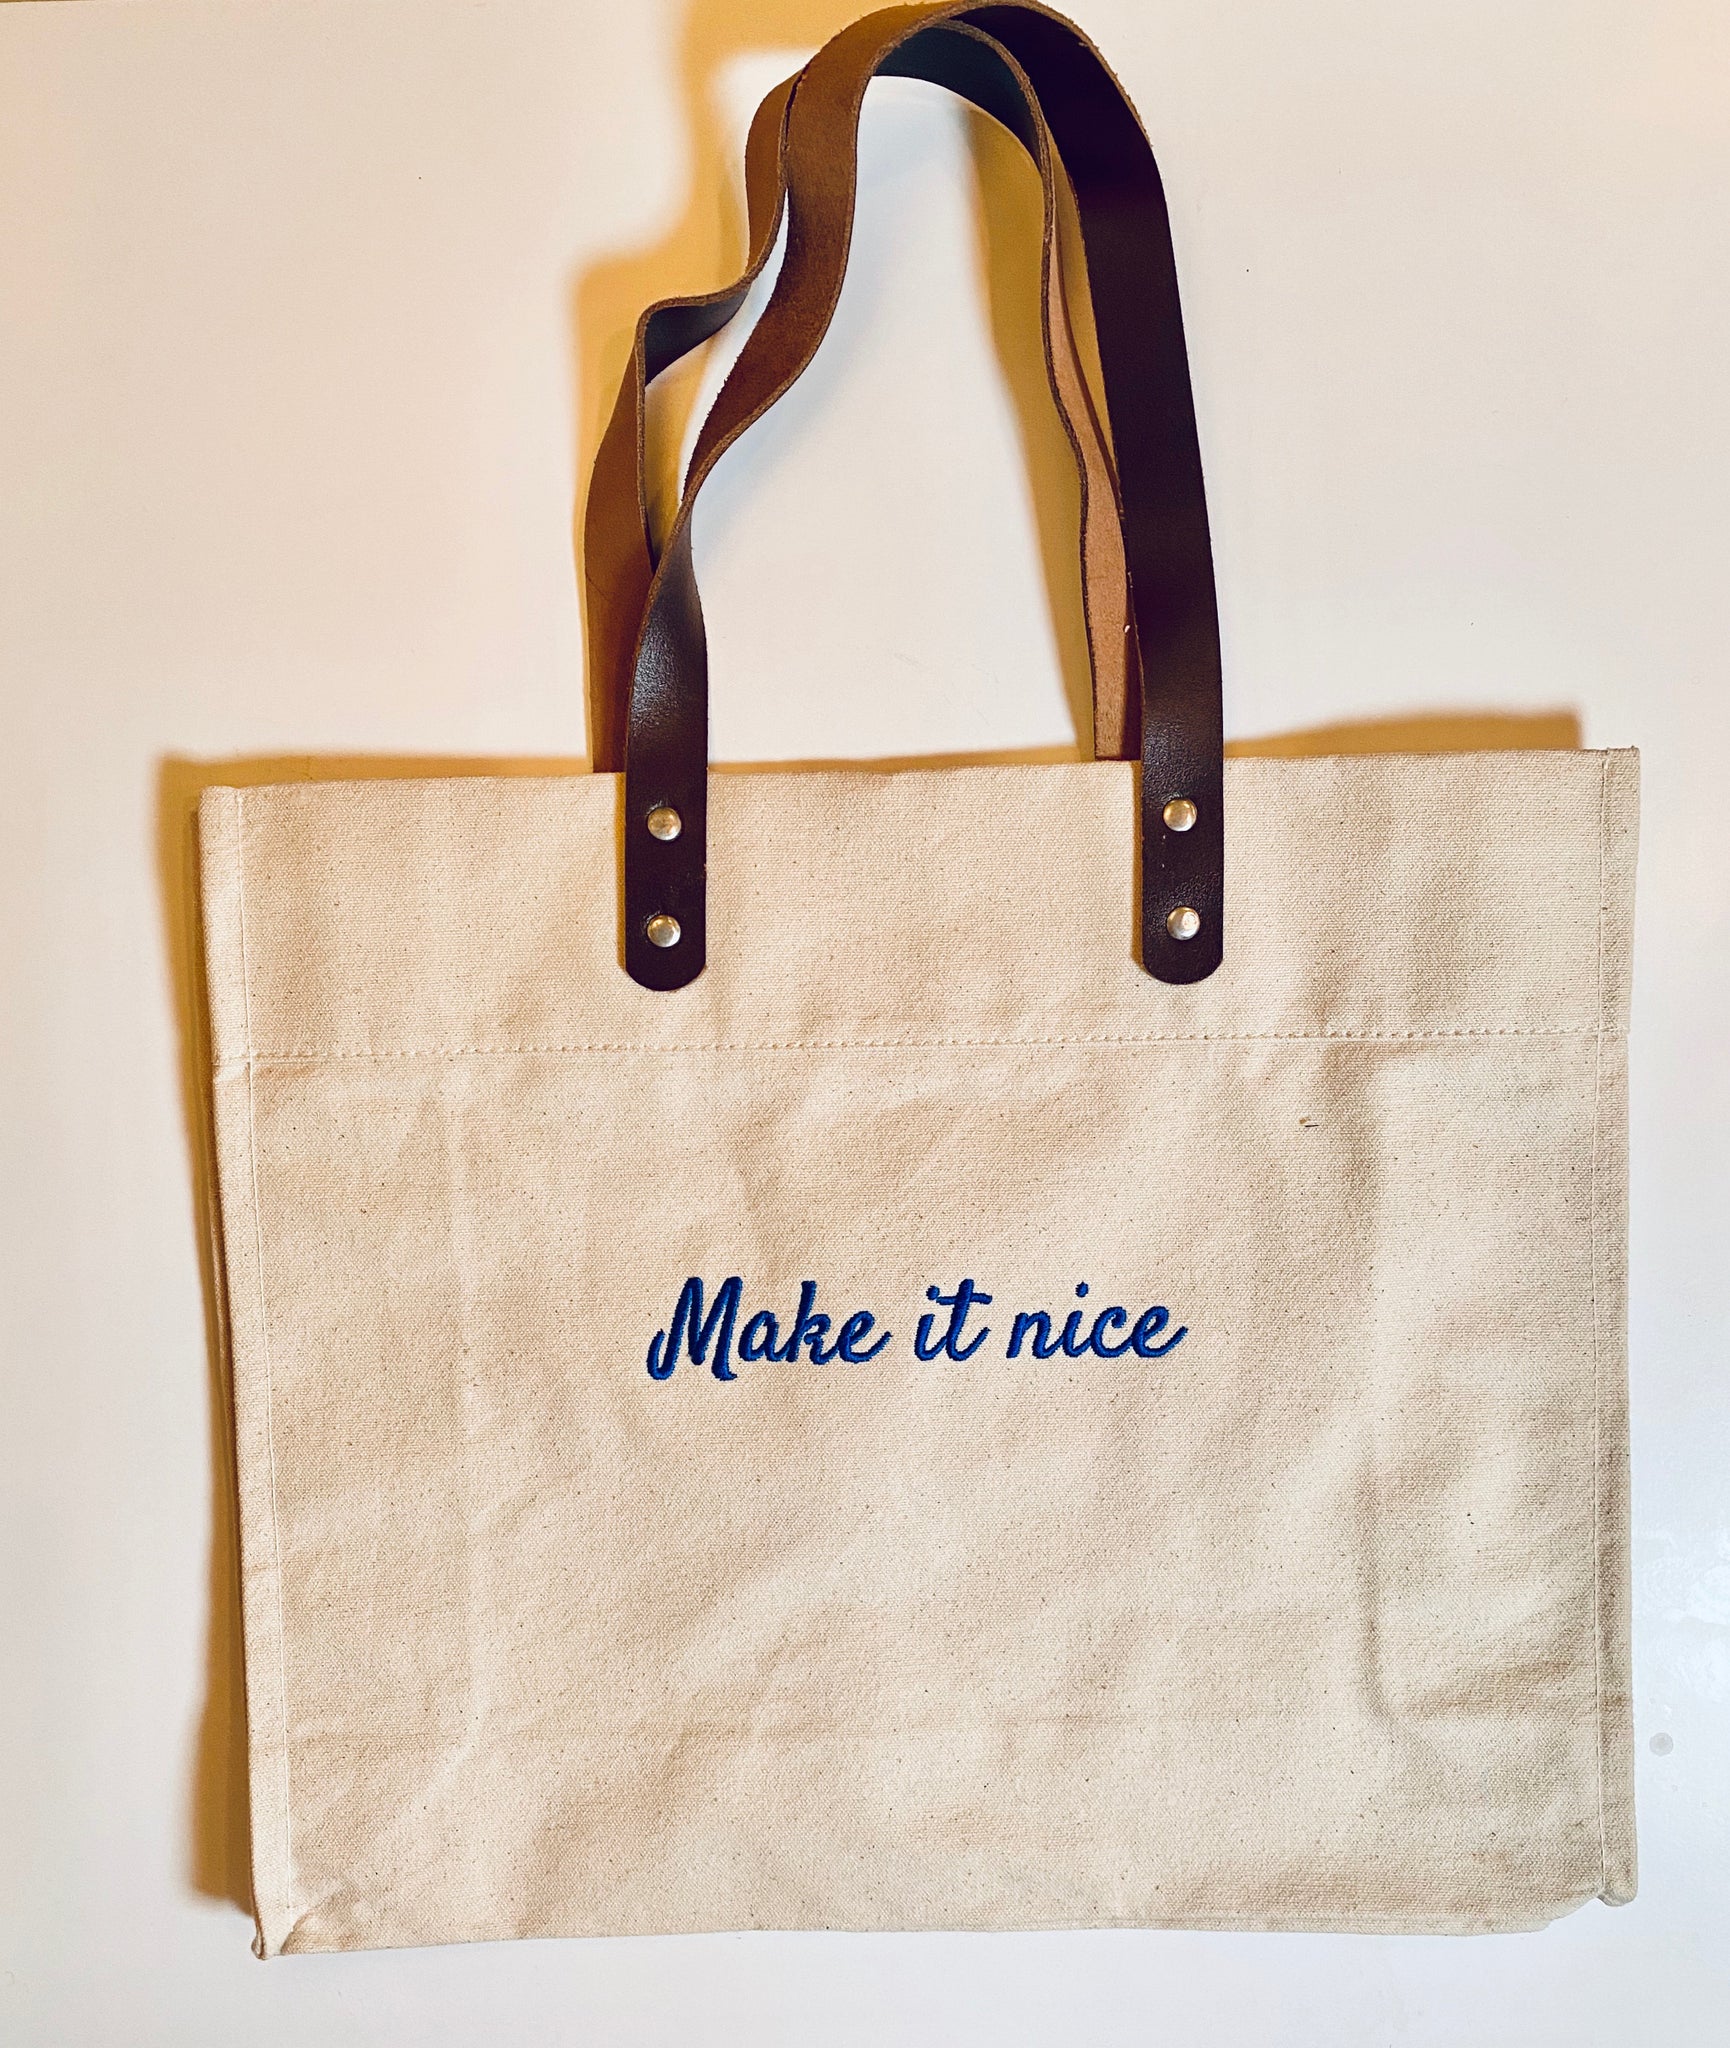 Minnie Bag - printed sewing pattern by Dhurata Davies